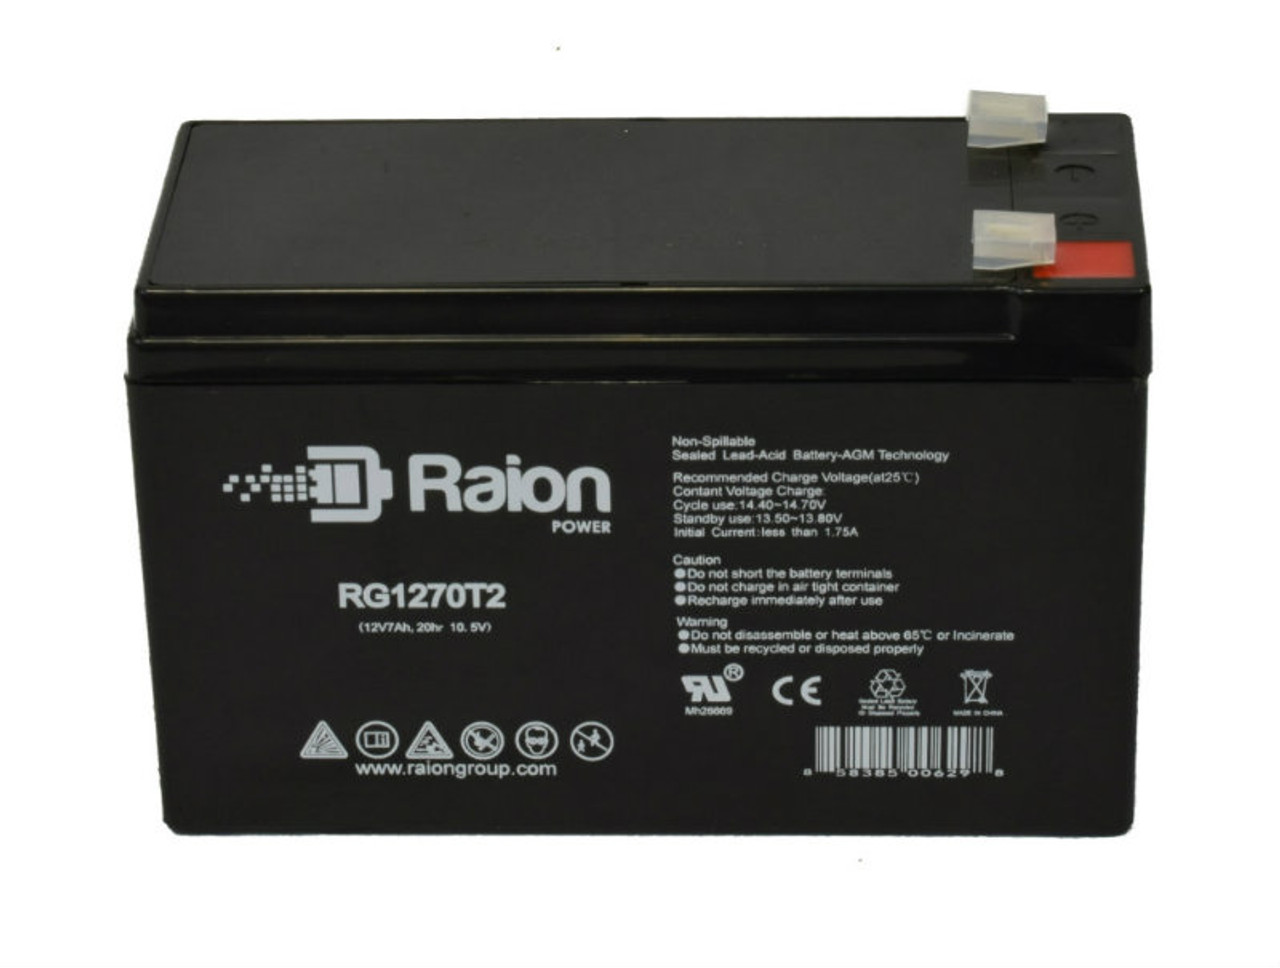 Raion Power RG1270T1 12V 7Ah Lead Acid Battery for Humminbird 345c Portable Fish Finder